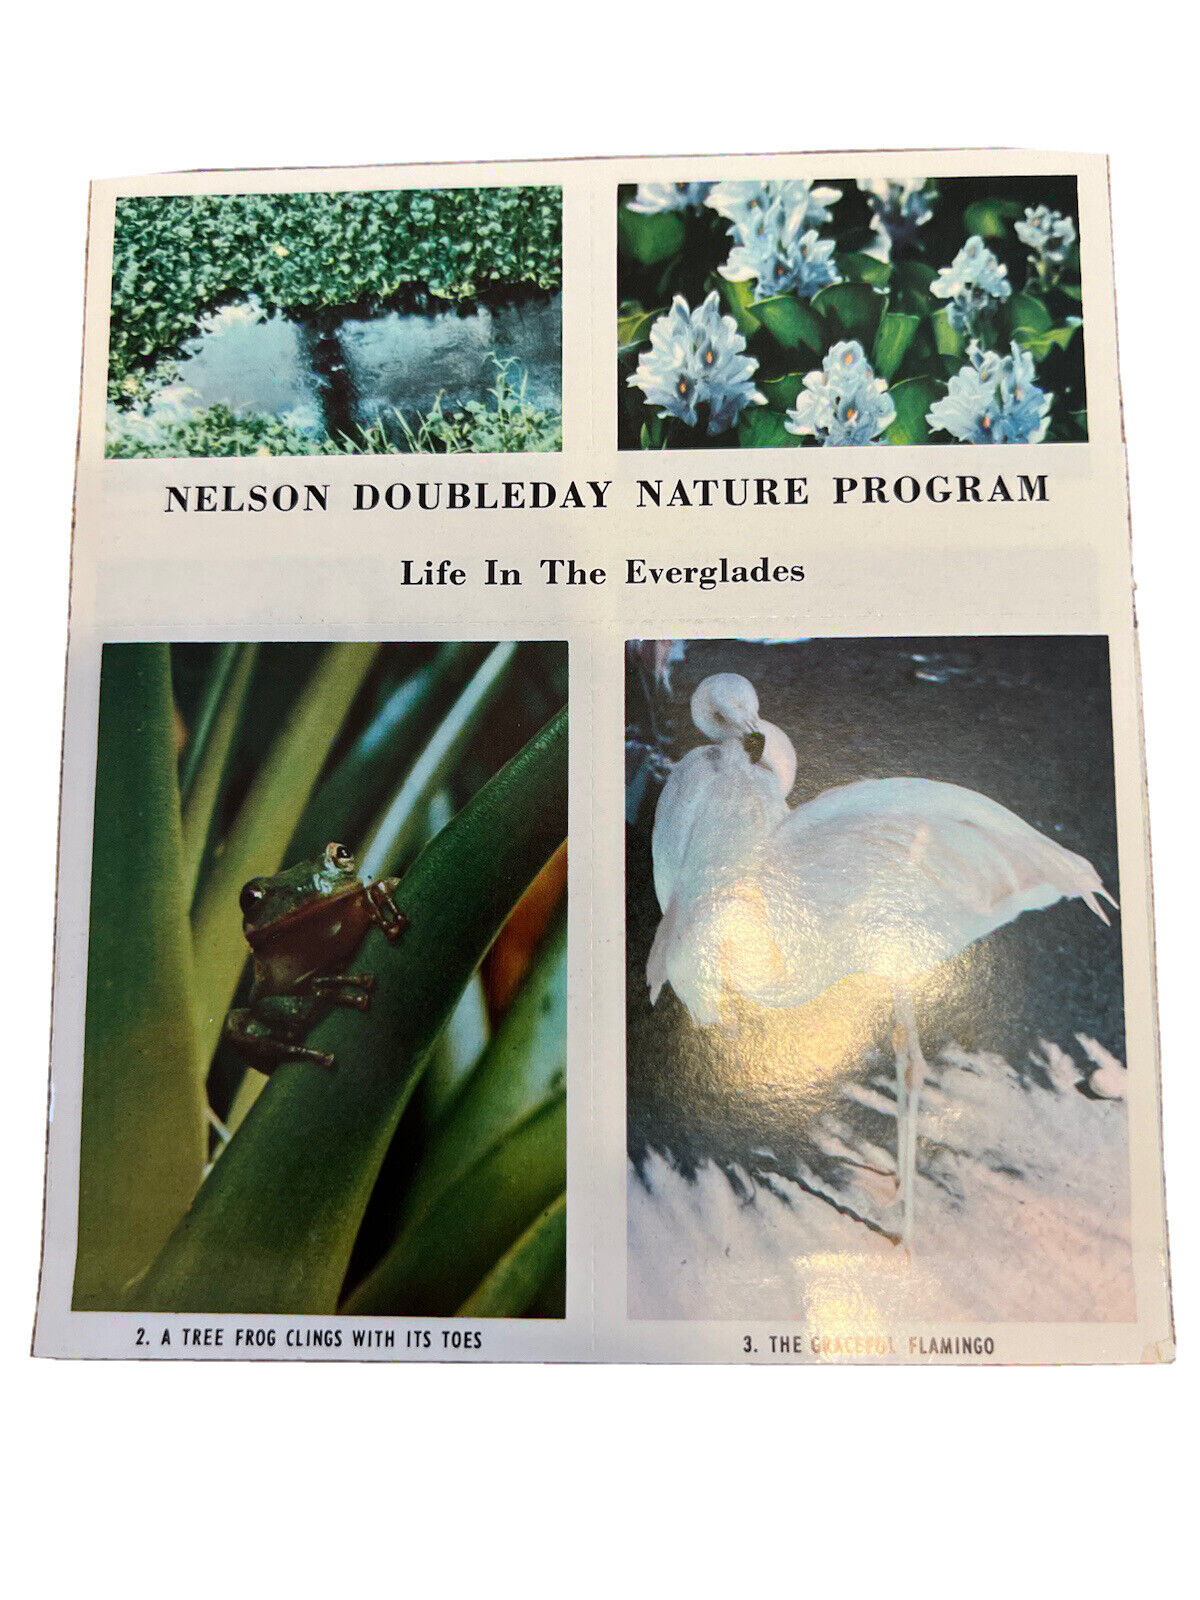 VTG National Audubon Society “Life In The Everglades”Sticker Sheet” Doubleday